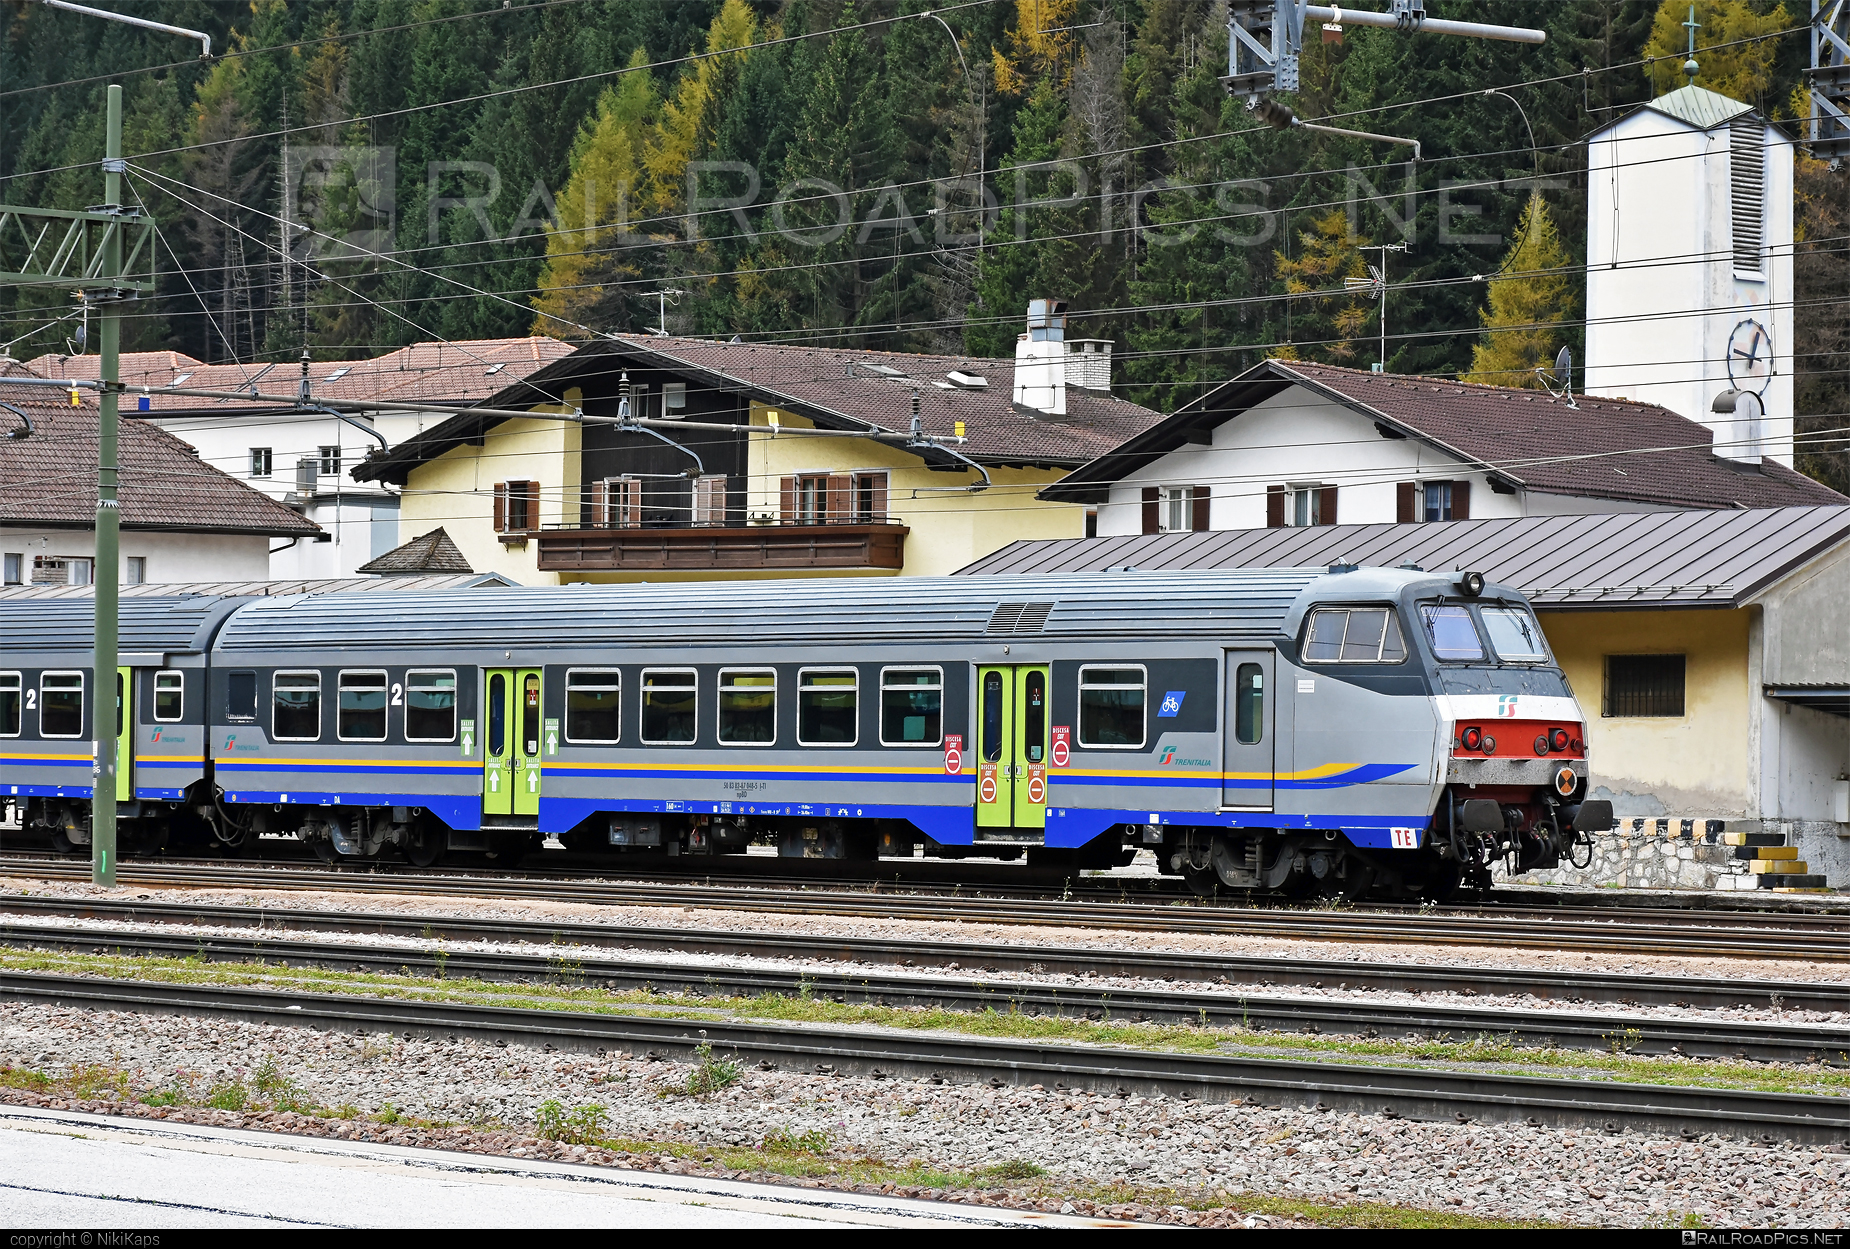 Class B - MDVC semi-pilot - 82-87 048-5 operated by Trenitalia S.p.A. #ferroviedellostato #fs #fsitaliane #mdvc #trenitalia #trenitaliaspa